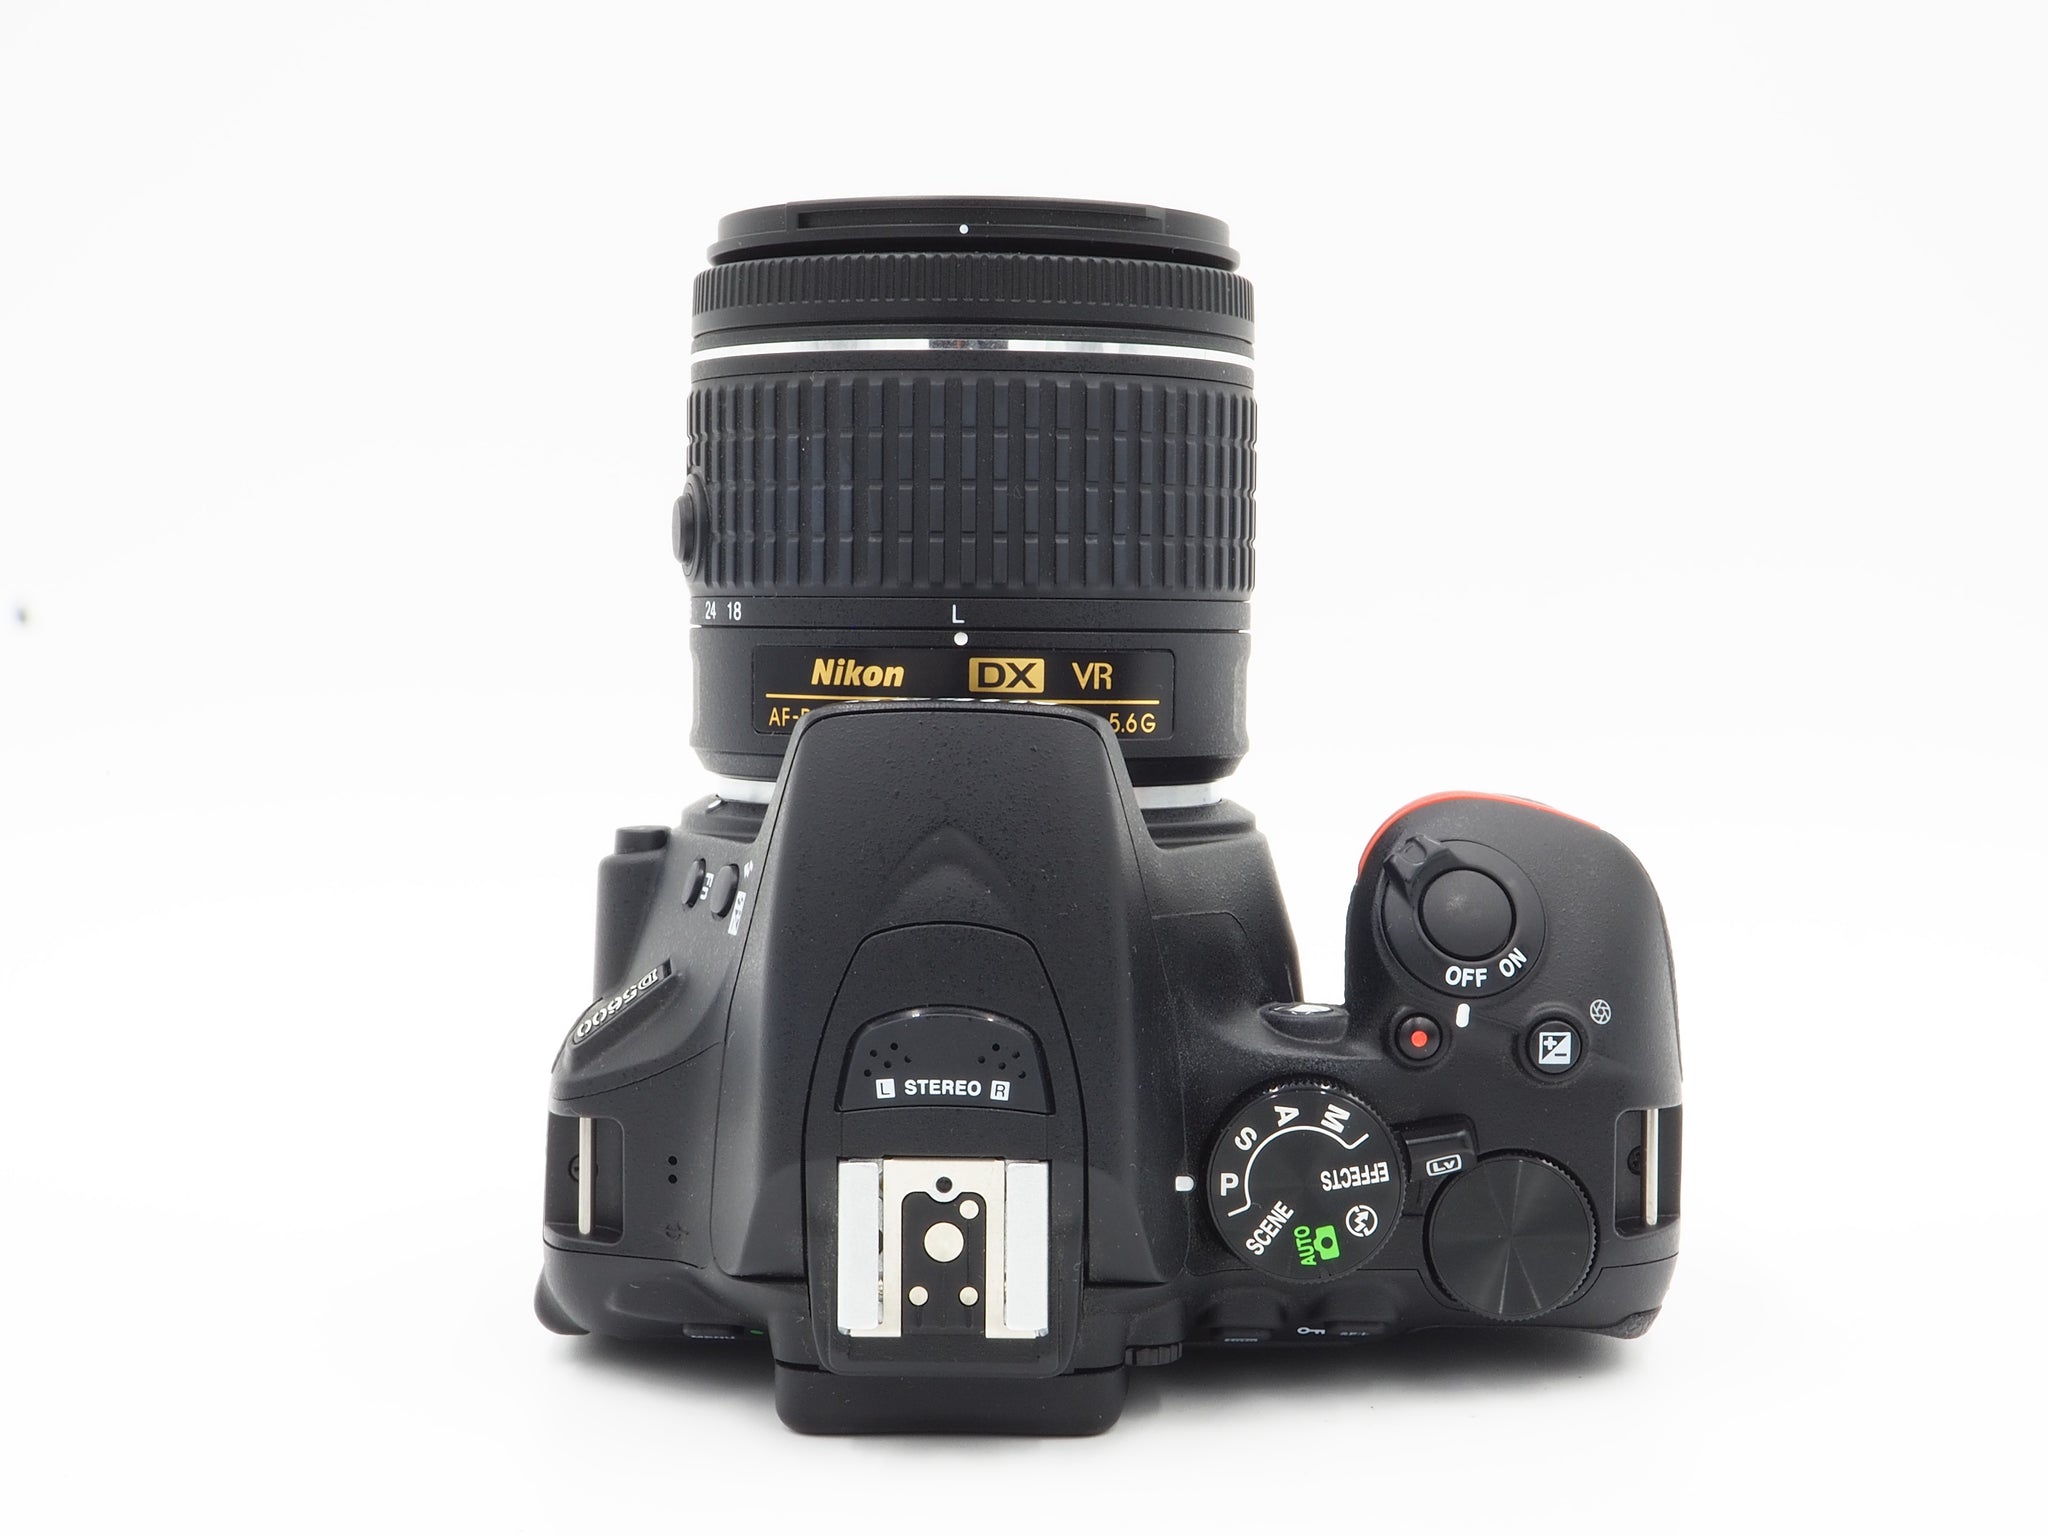 Nikon D5600 DSLR 24.2MP Camera with 18-55mm Lens 